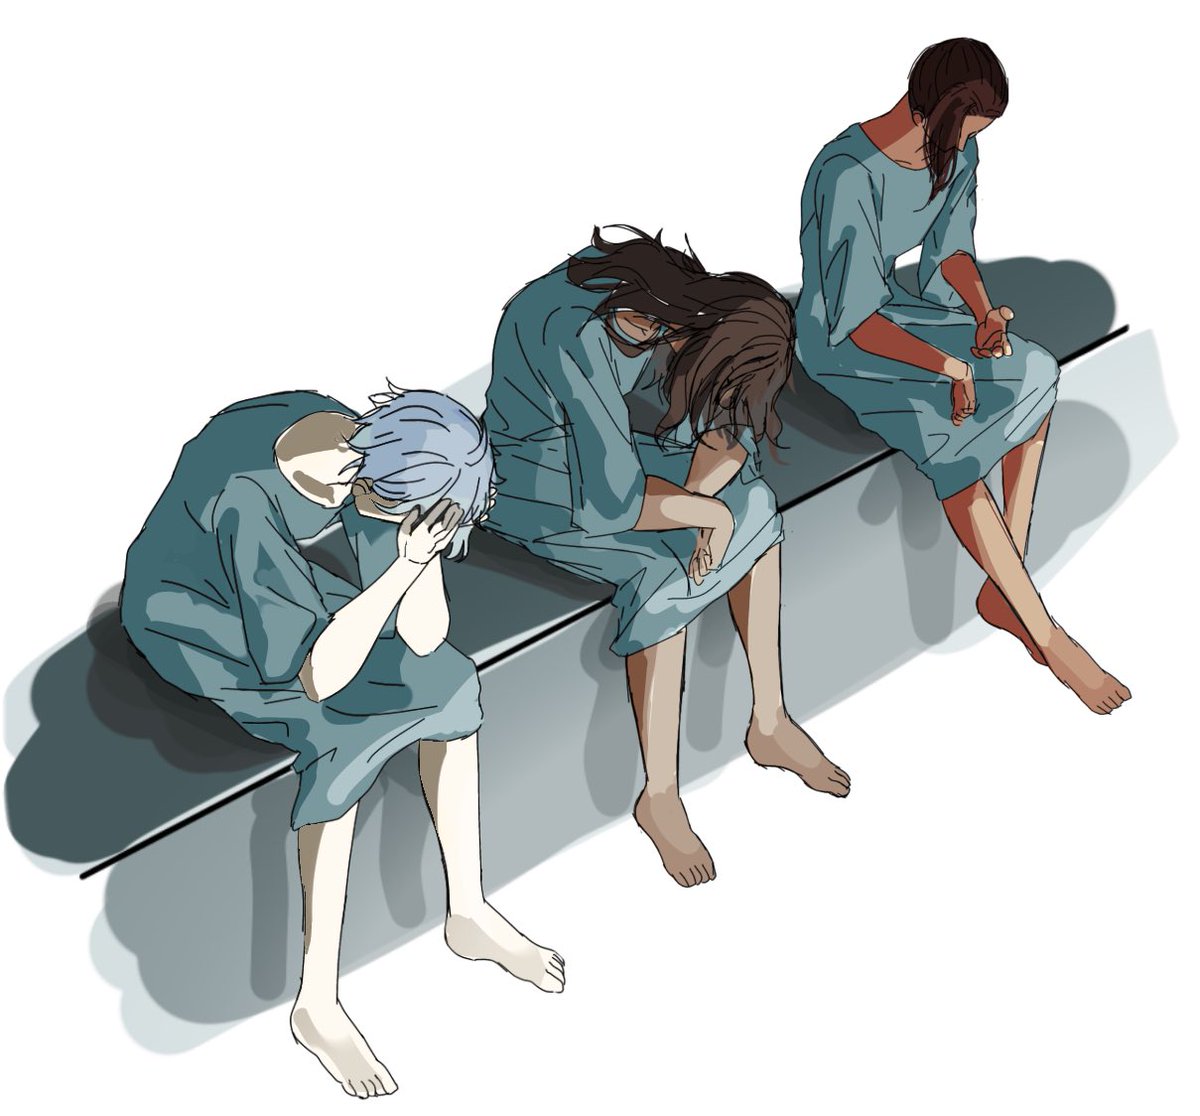 barefoot sitting brown hair multiple girls long hair 2girls hospital gown  illustration images